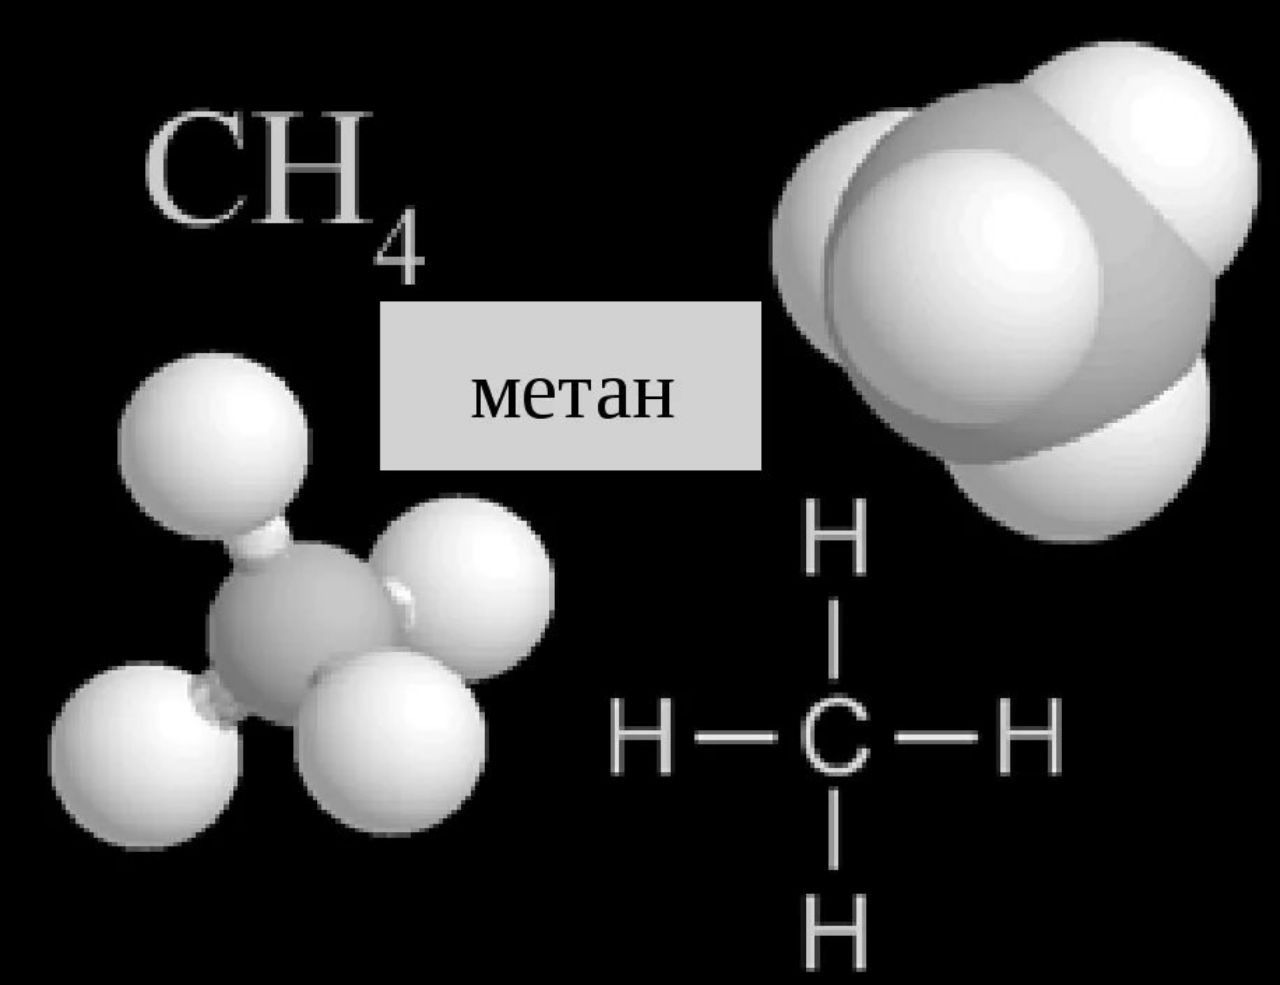 Ch4 газ название. Модель метана ch4. Формула молекулы метана сн4. Химическая формула молекулы метана. Метан ch4.